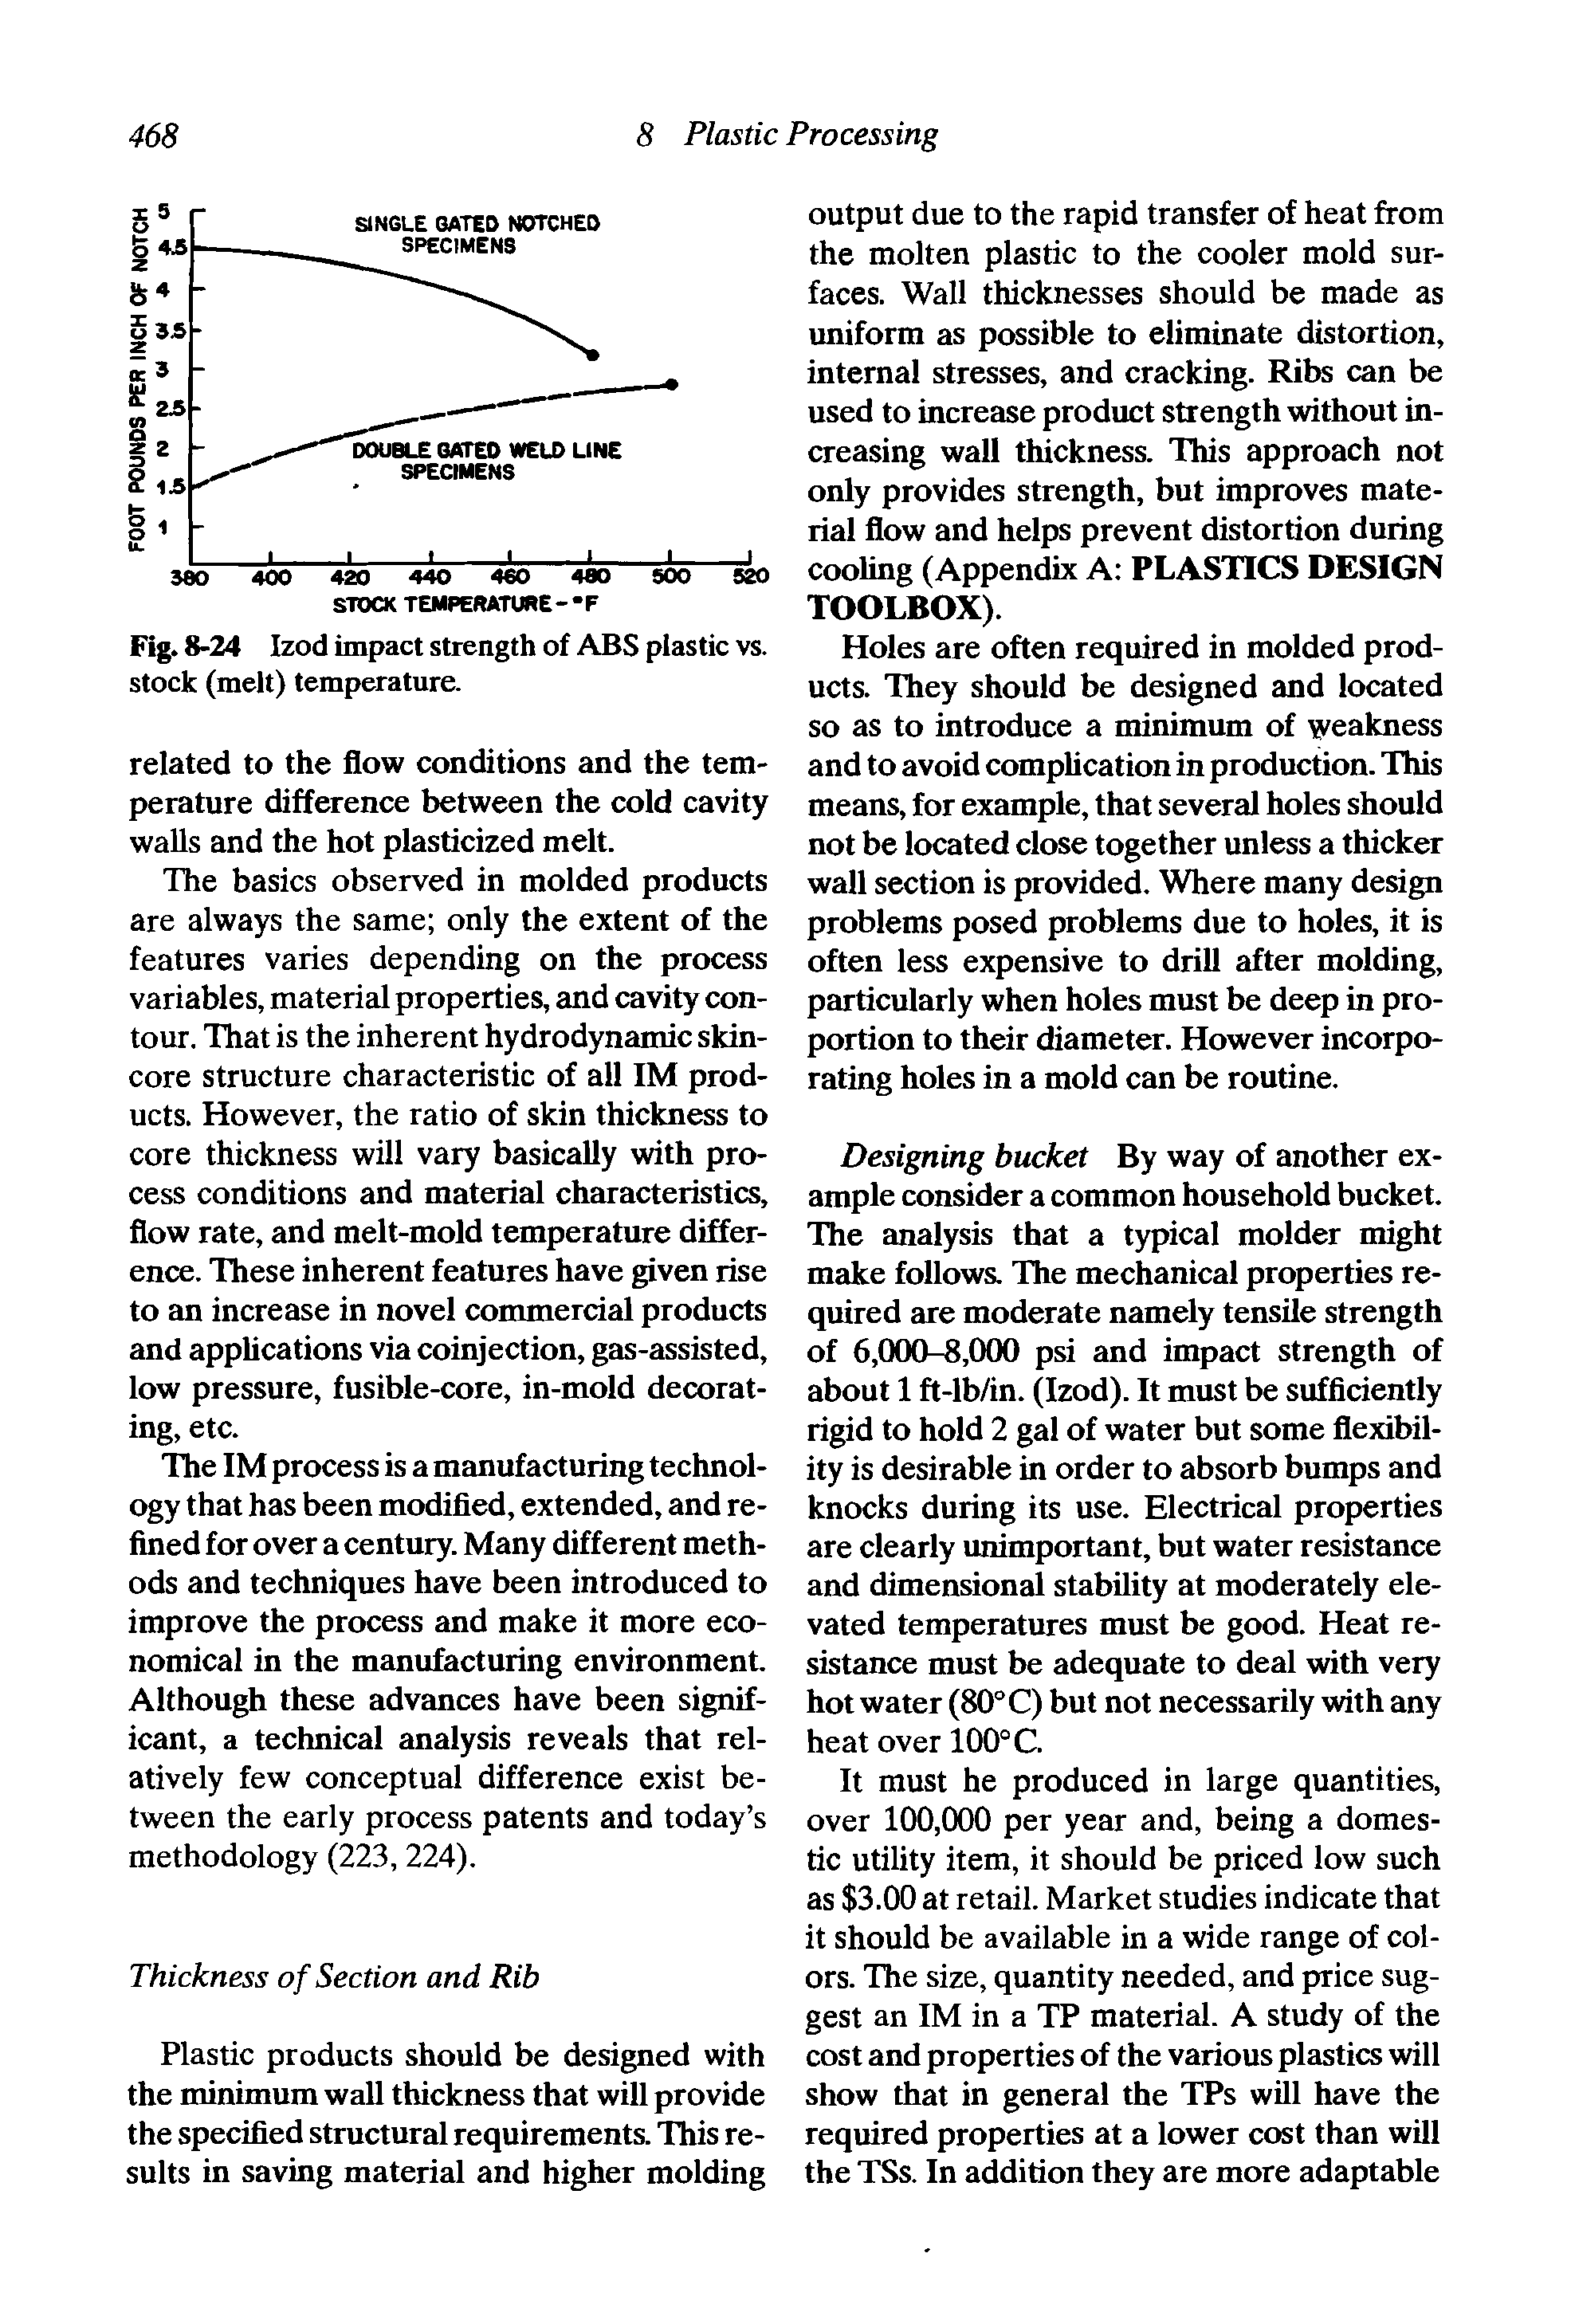 Fig. 8-24 Izod impact strength of ABS plastic vs. stock (melt) temperature.